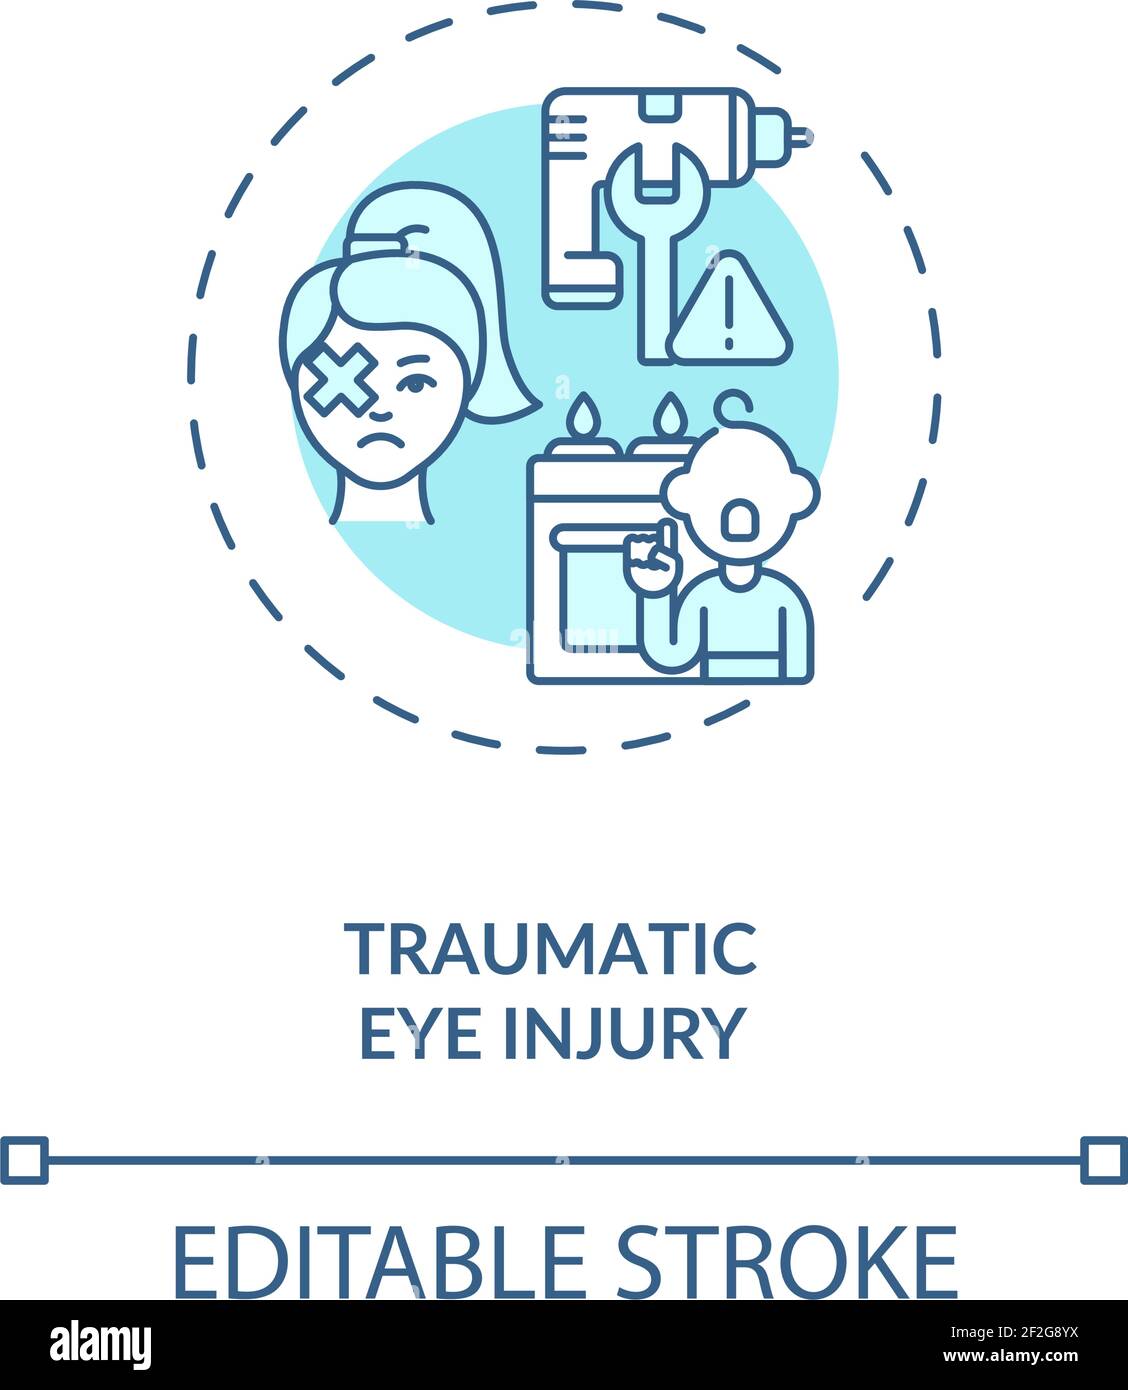 Traumatic eye injury concept icon Stock Vector